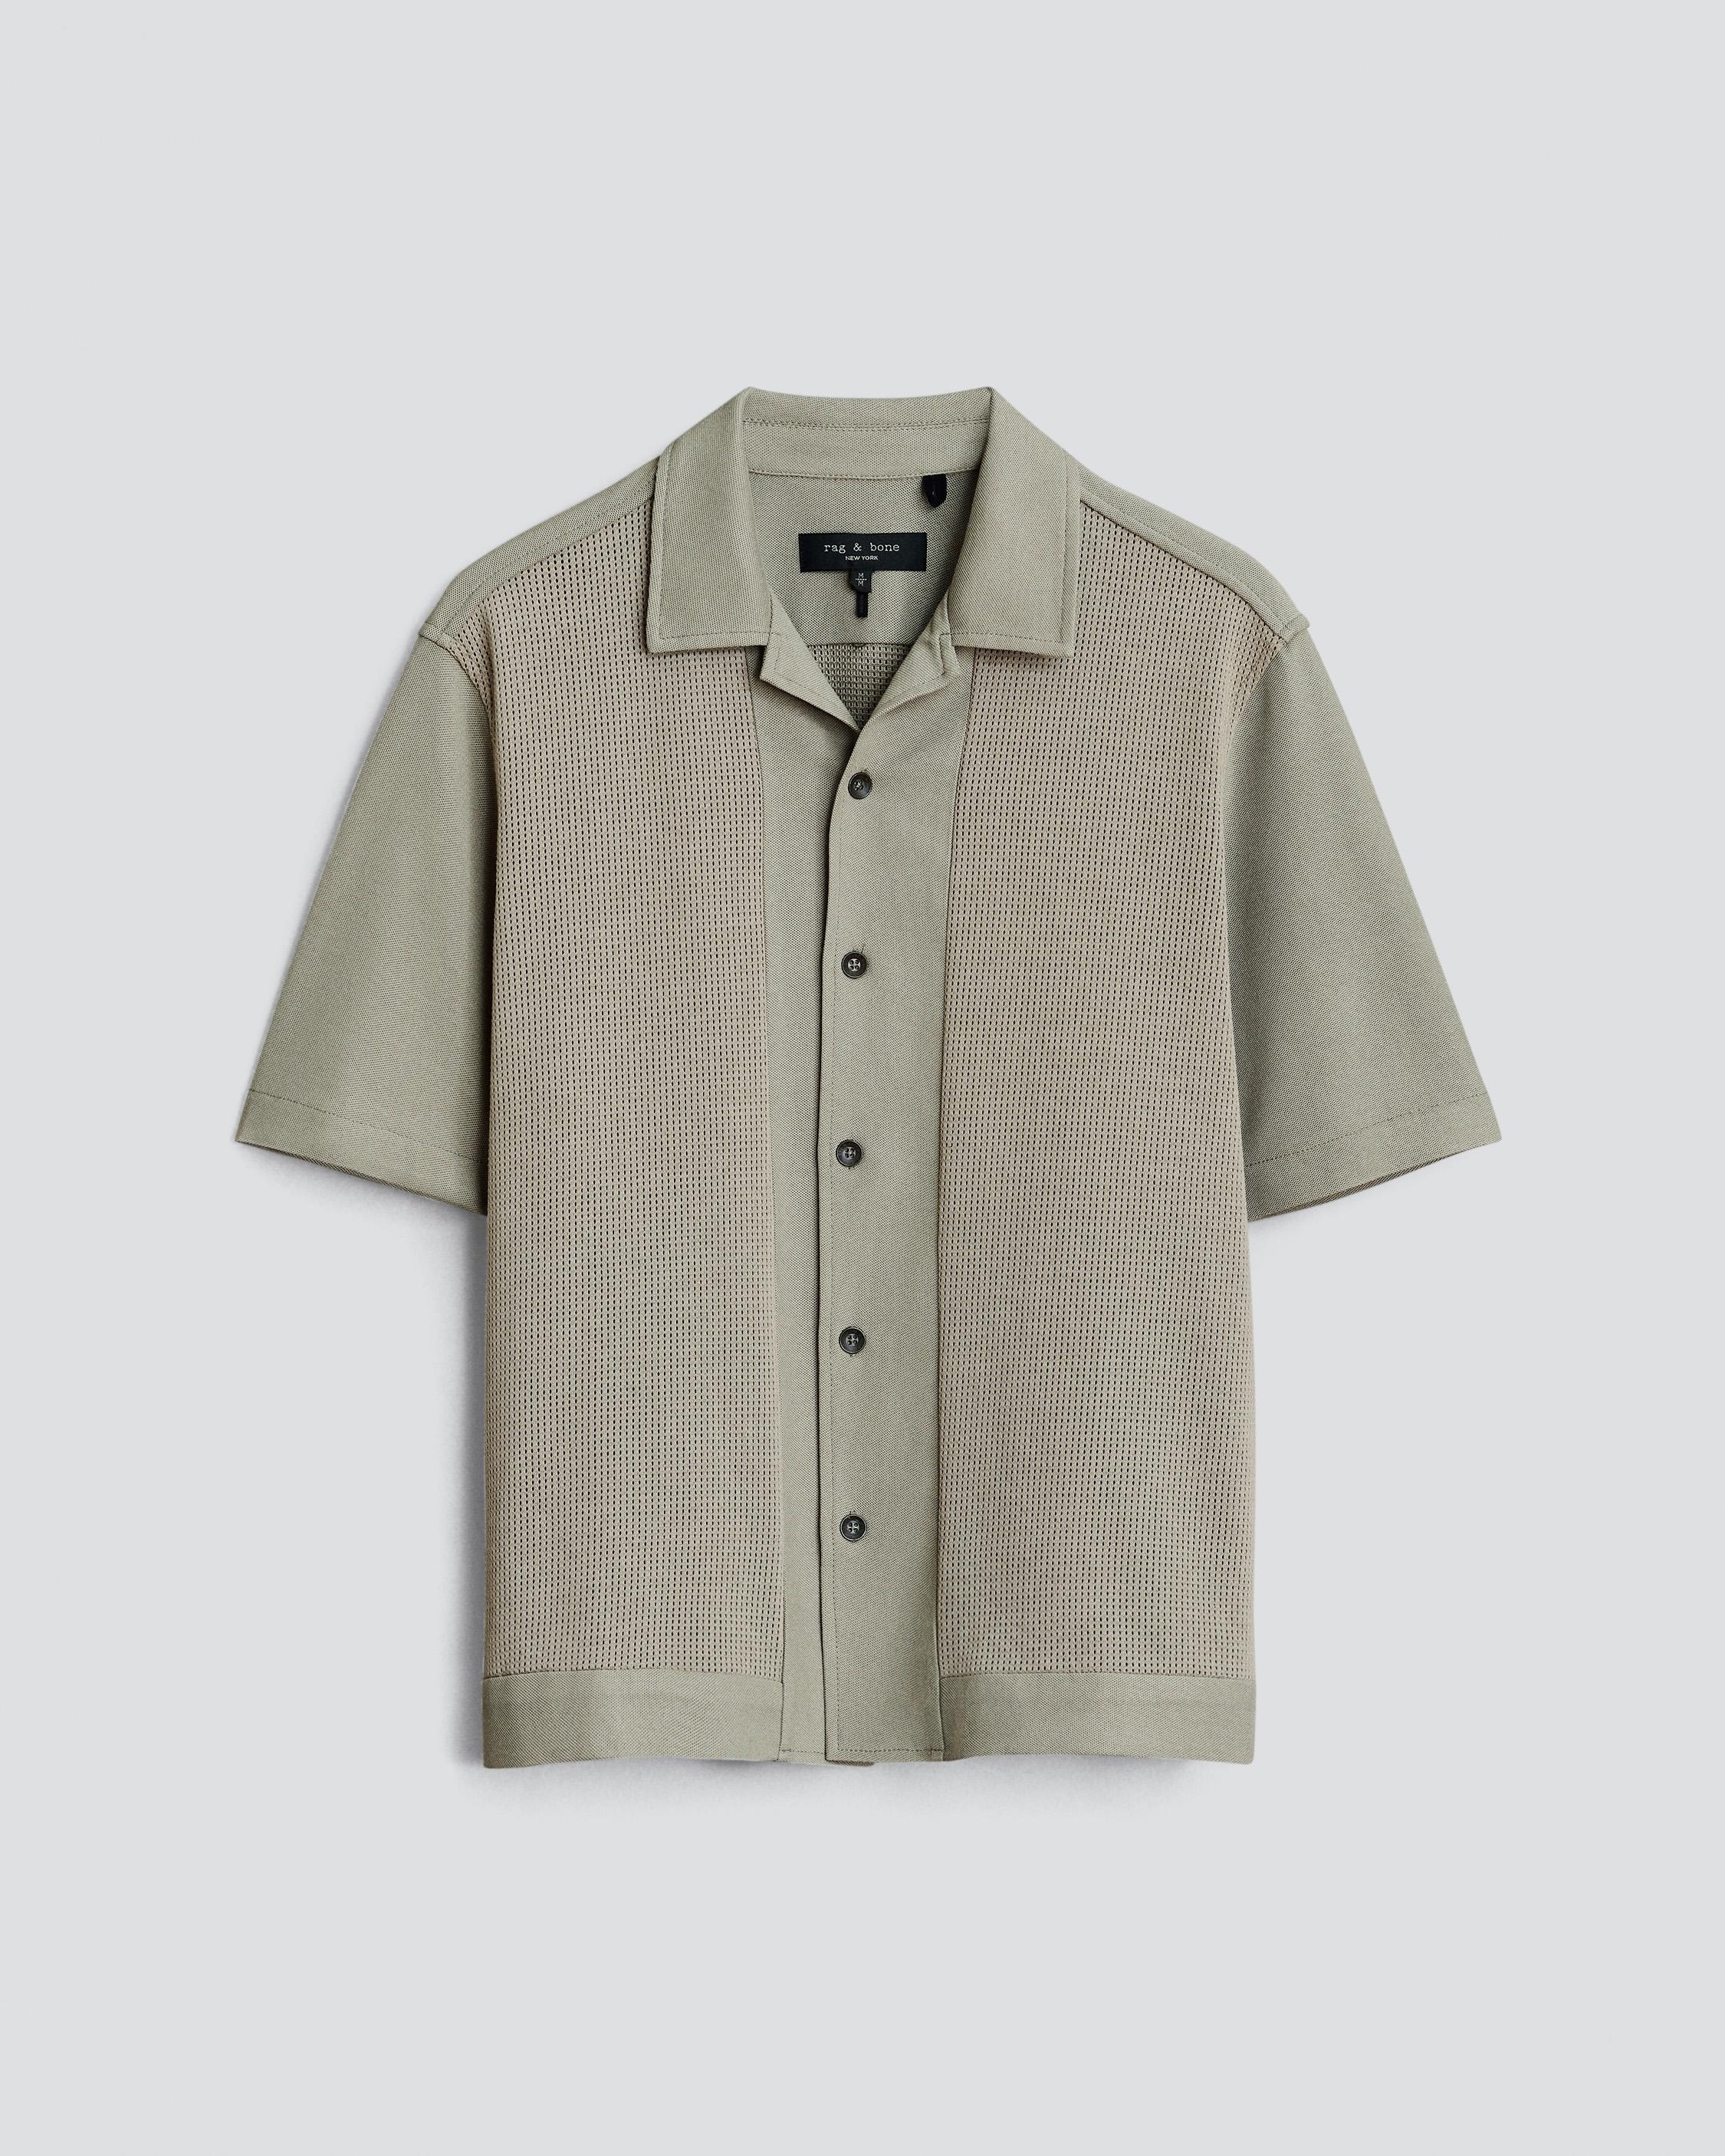 Avery Knit Mesh Shirt
Classic Fit Shirt - 1